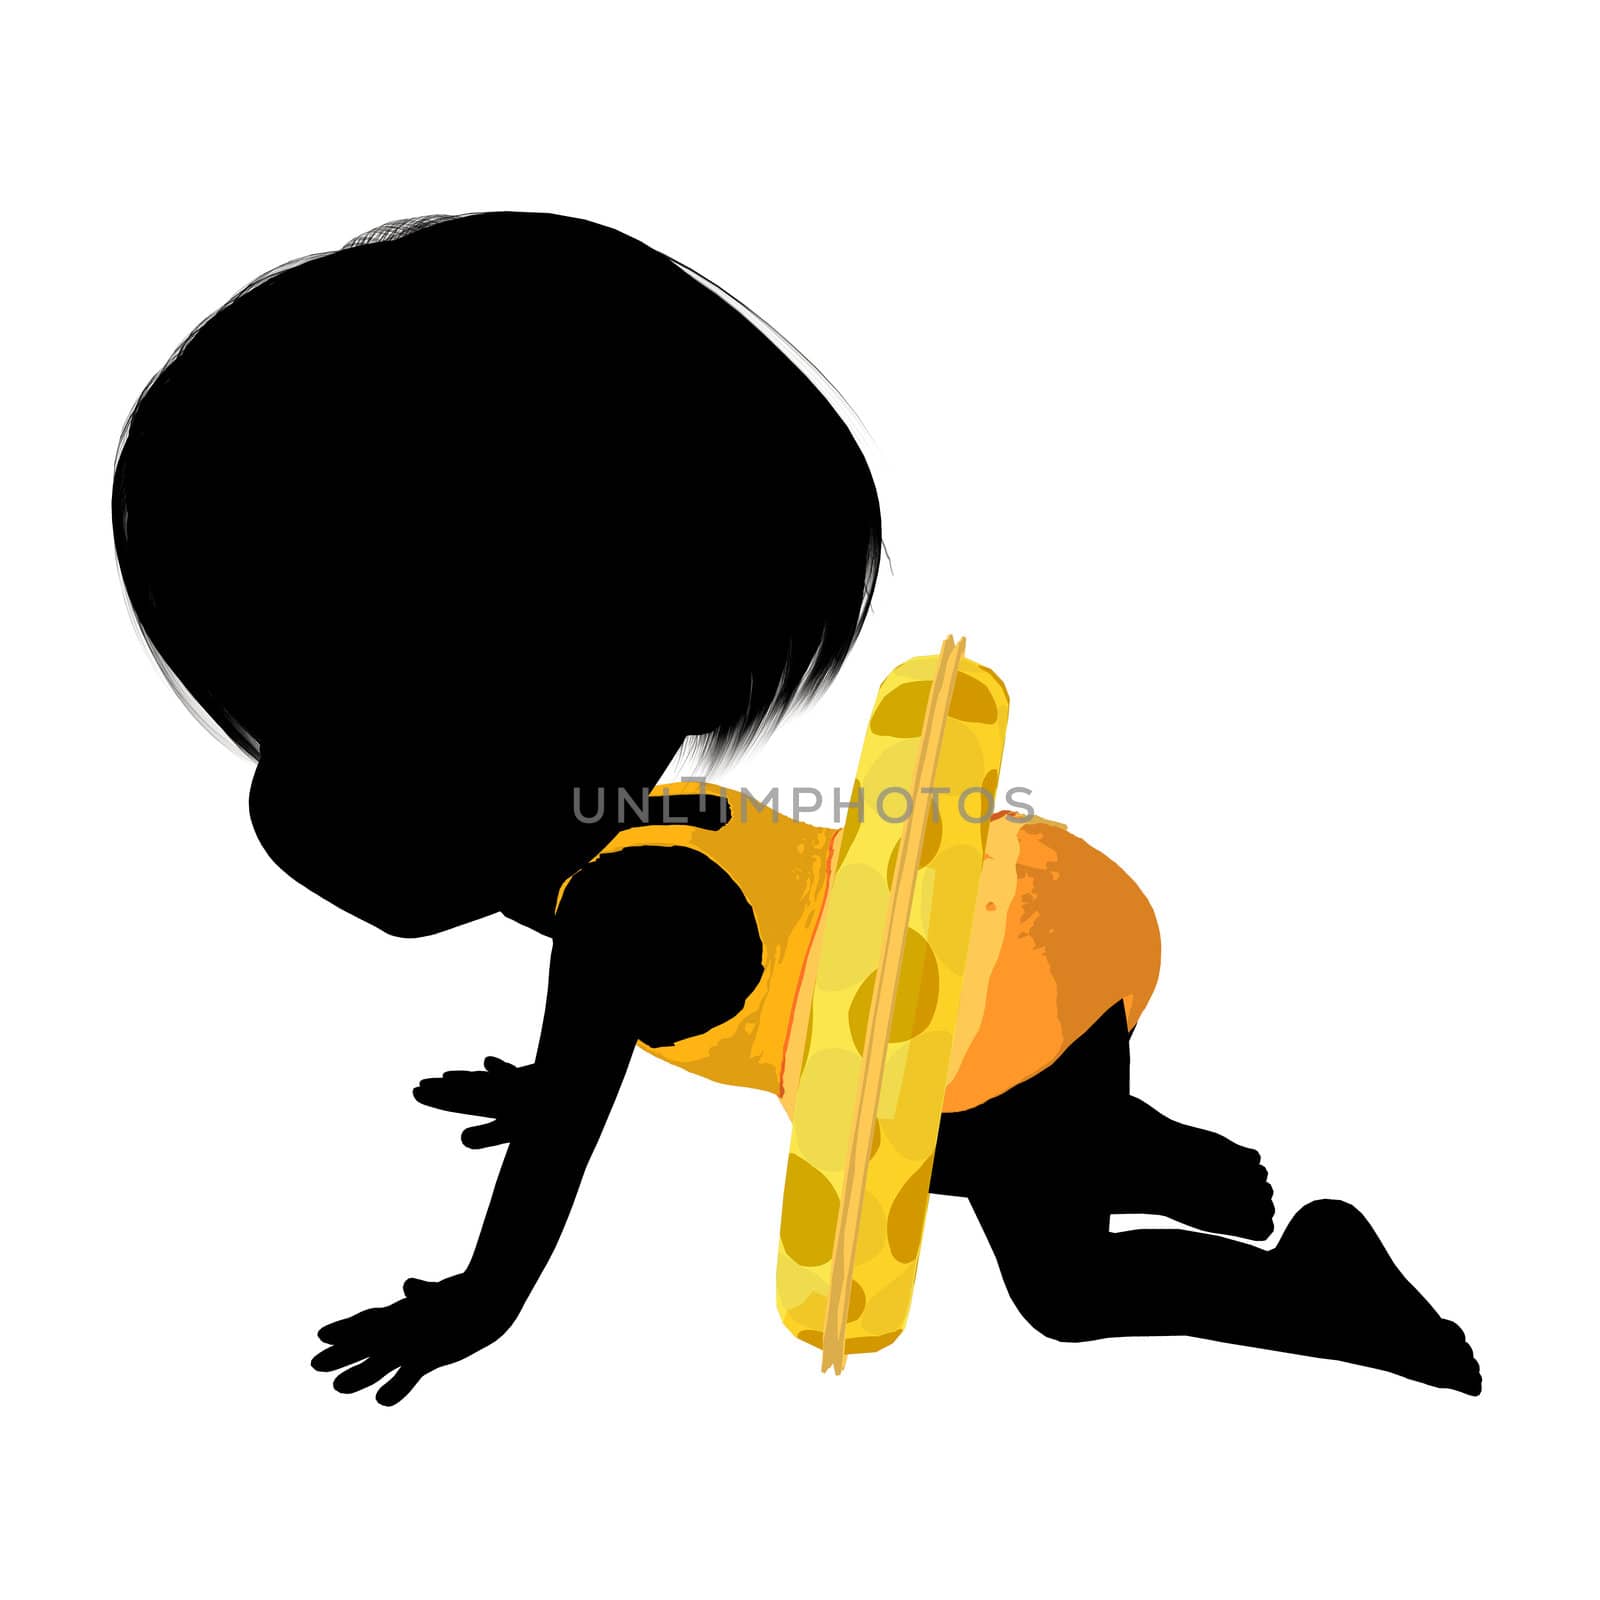 Little Swimsuit Girl Illustration Silhouette by kathygold